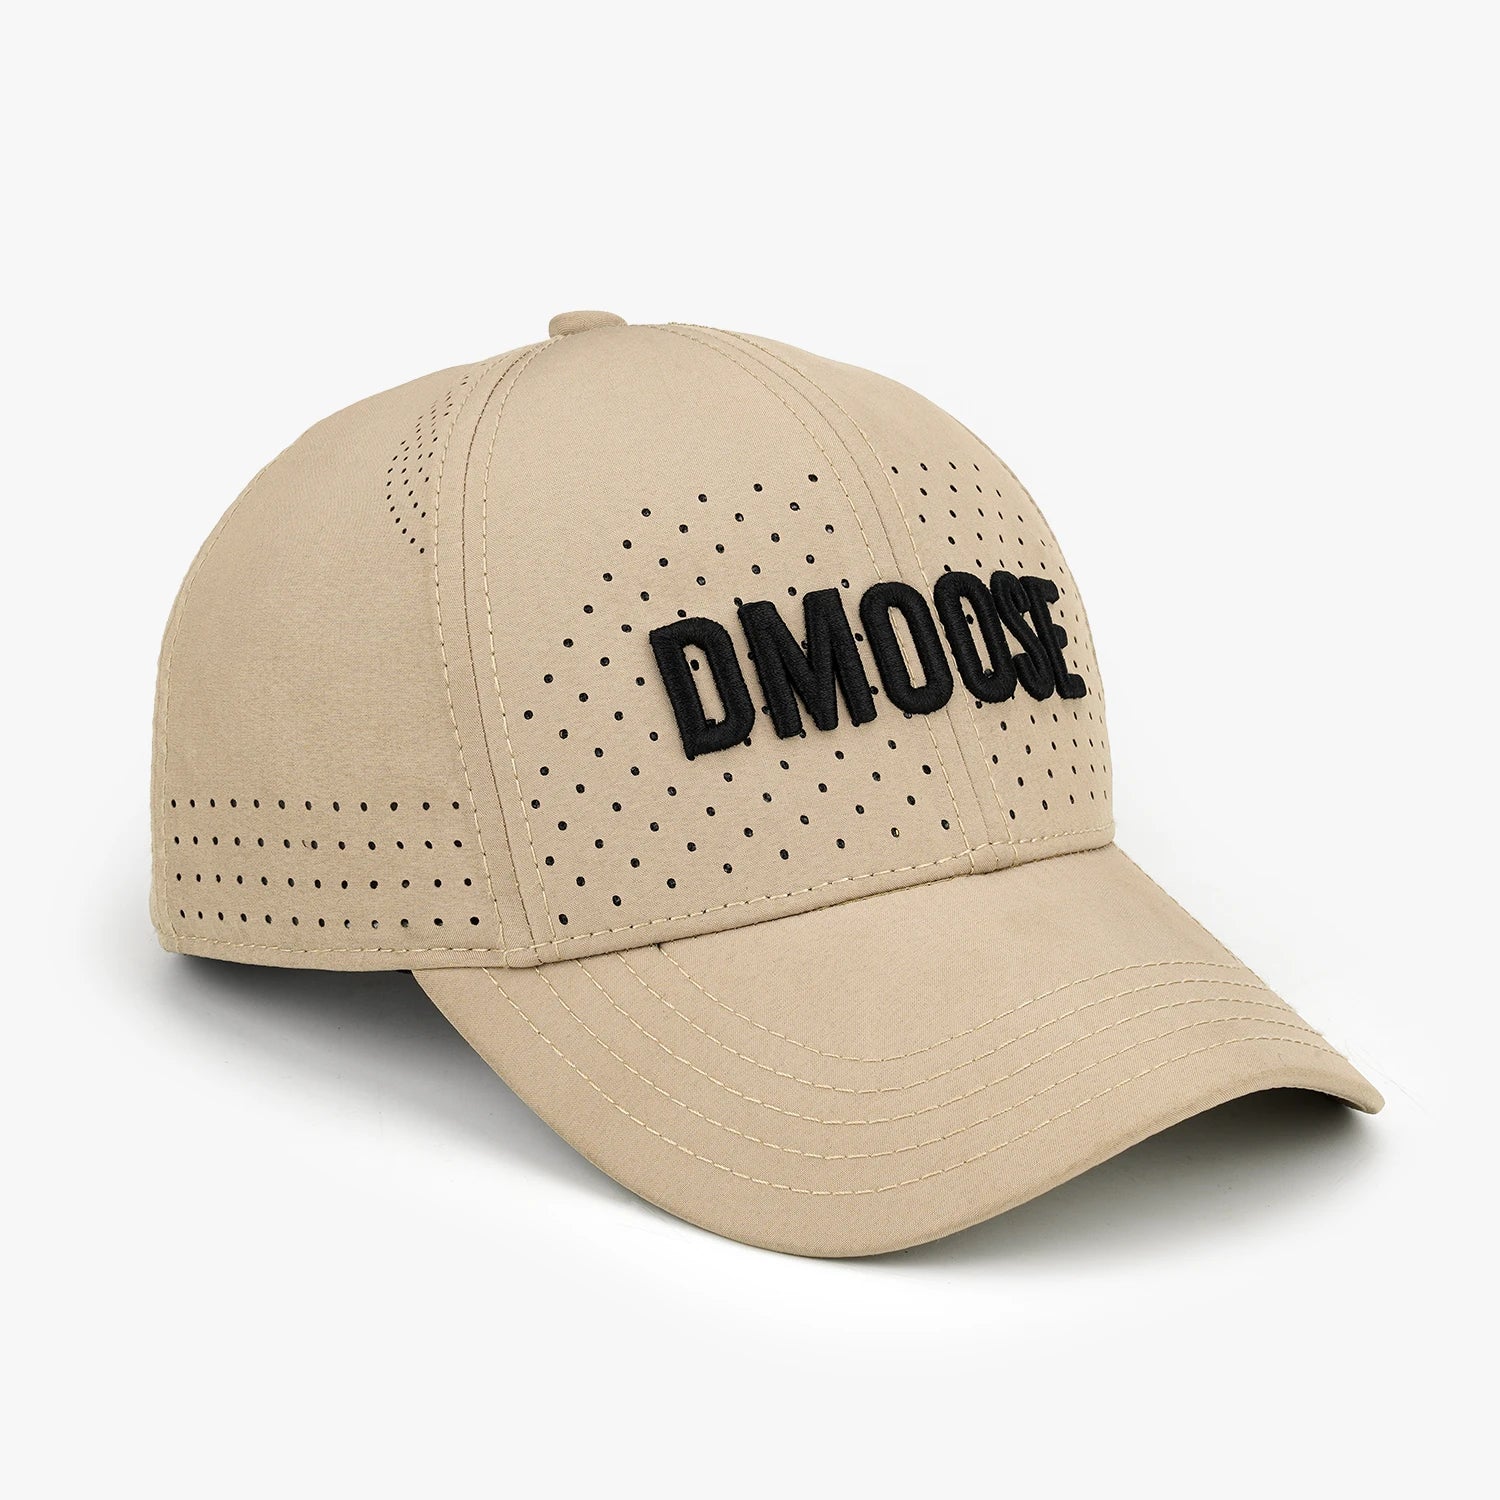 DMoose Embroidered Trucker Hat